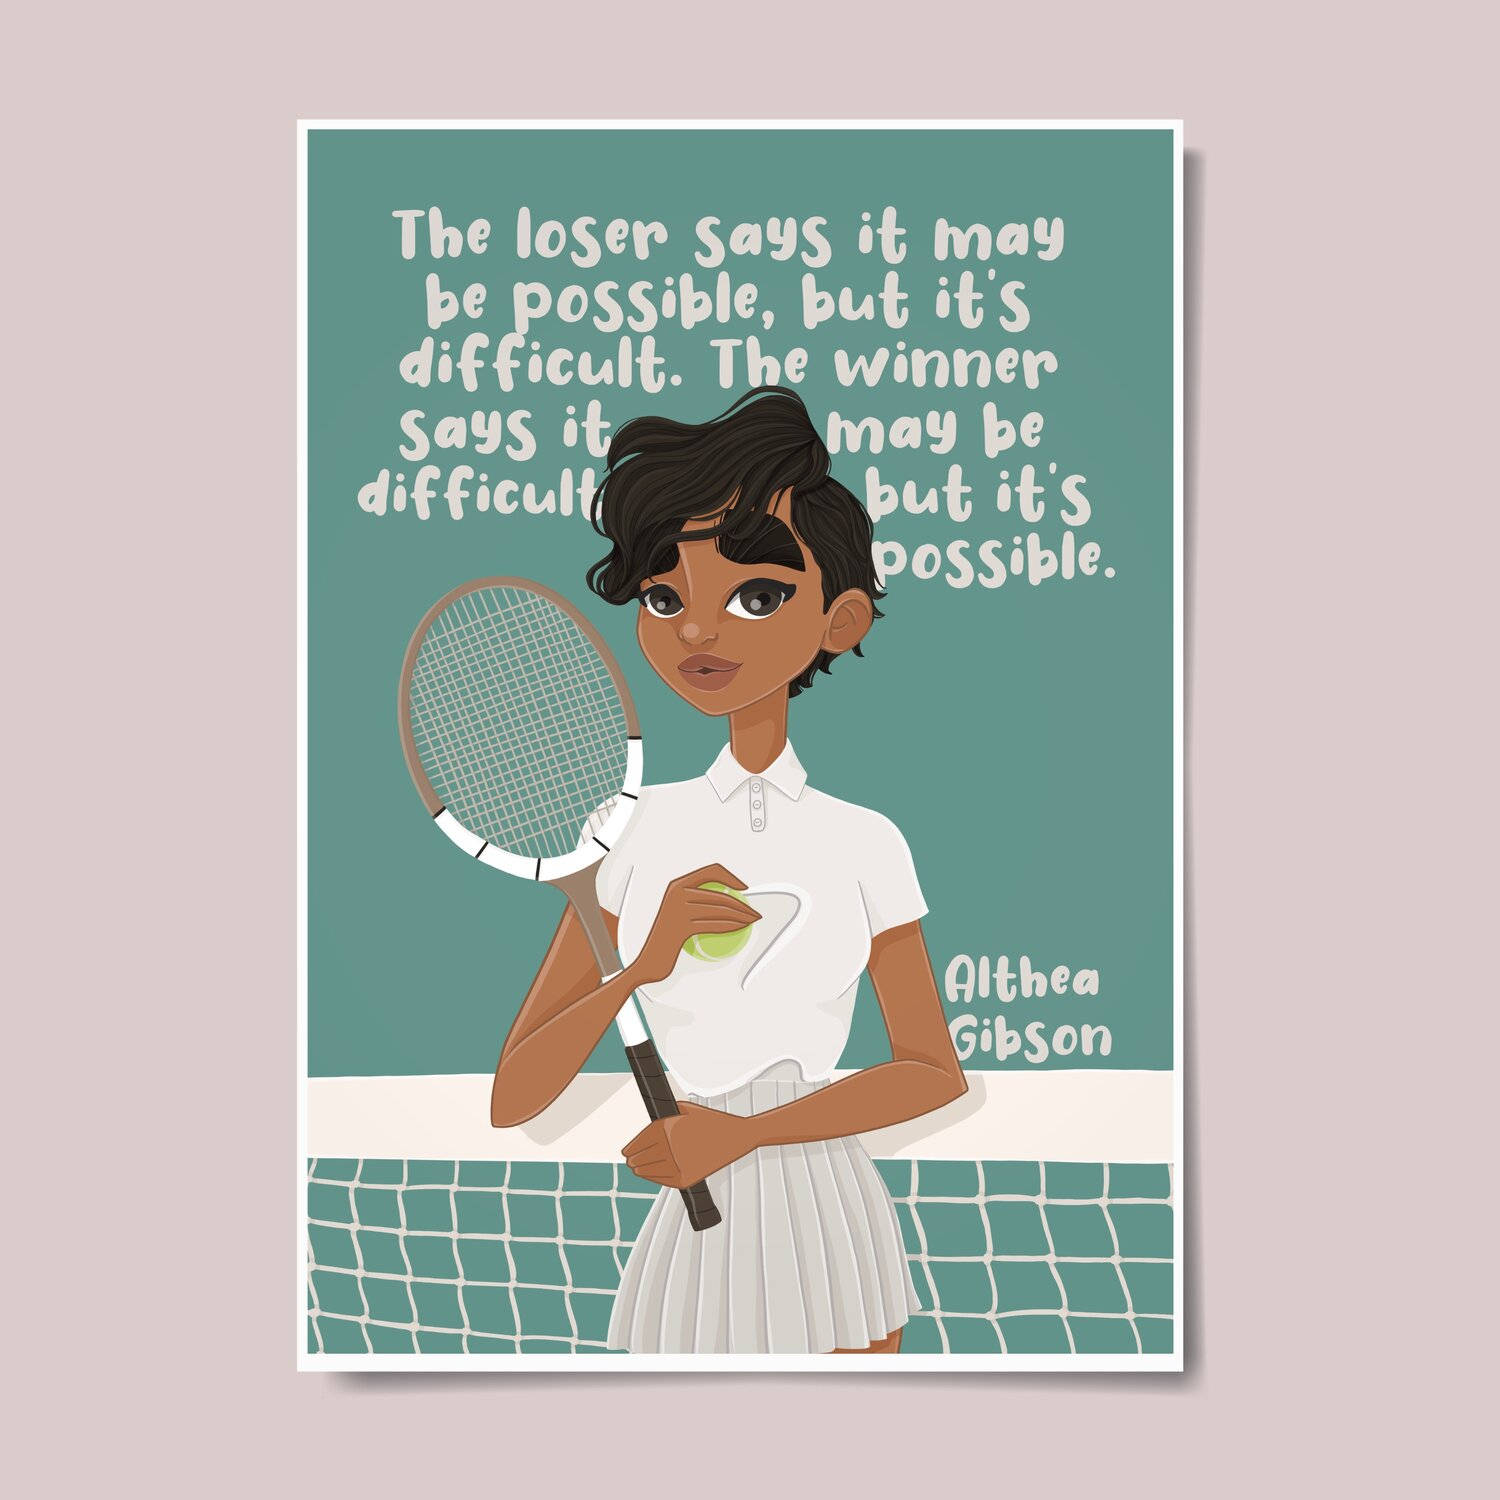 "Althea Gibson - The Tennis Legend in Cartoon Form" Wallpaper